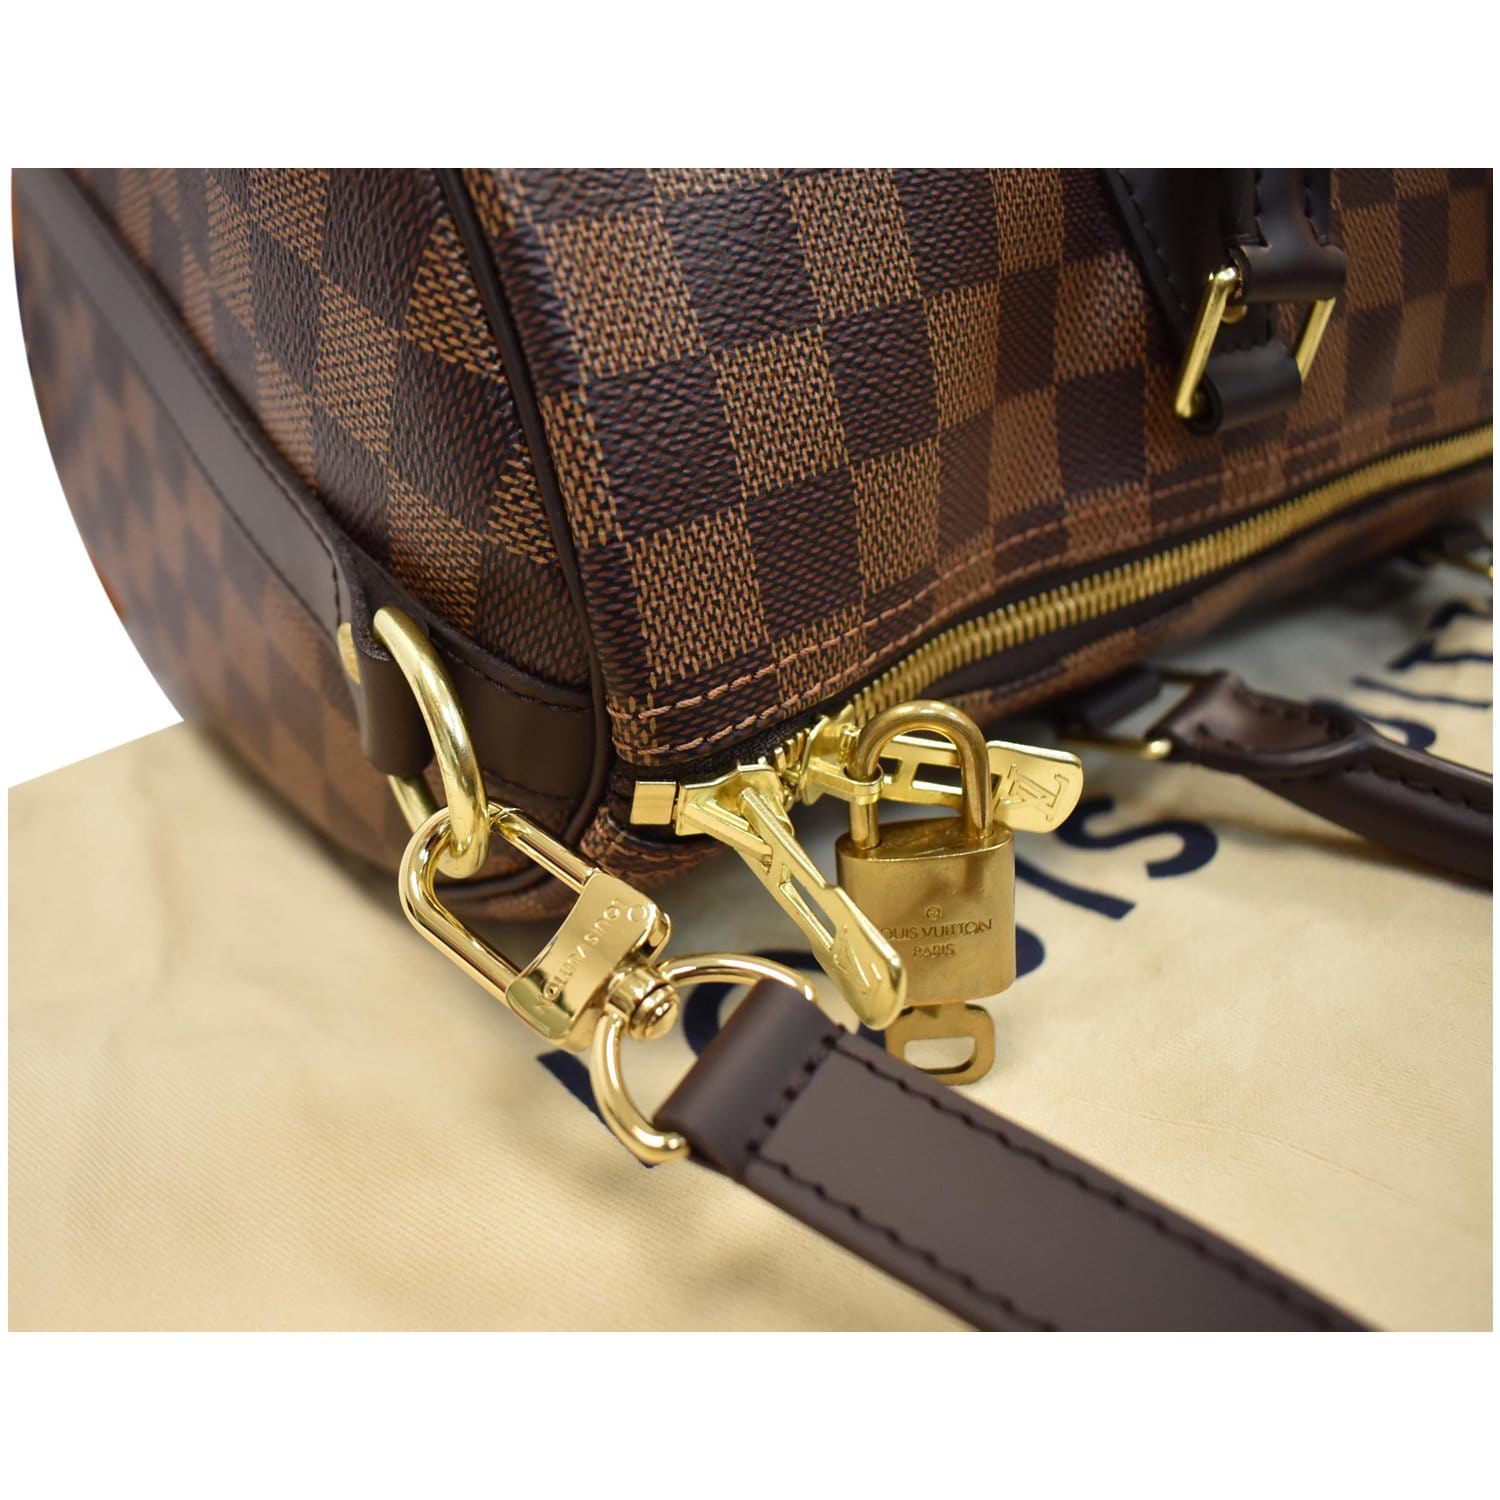 Louis Vuitton Speedy Bandouliere Bag Damier 35 Brown 943471